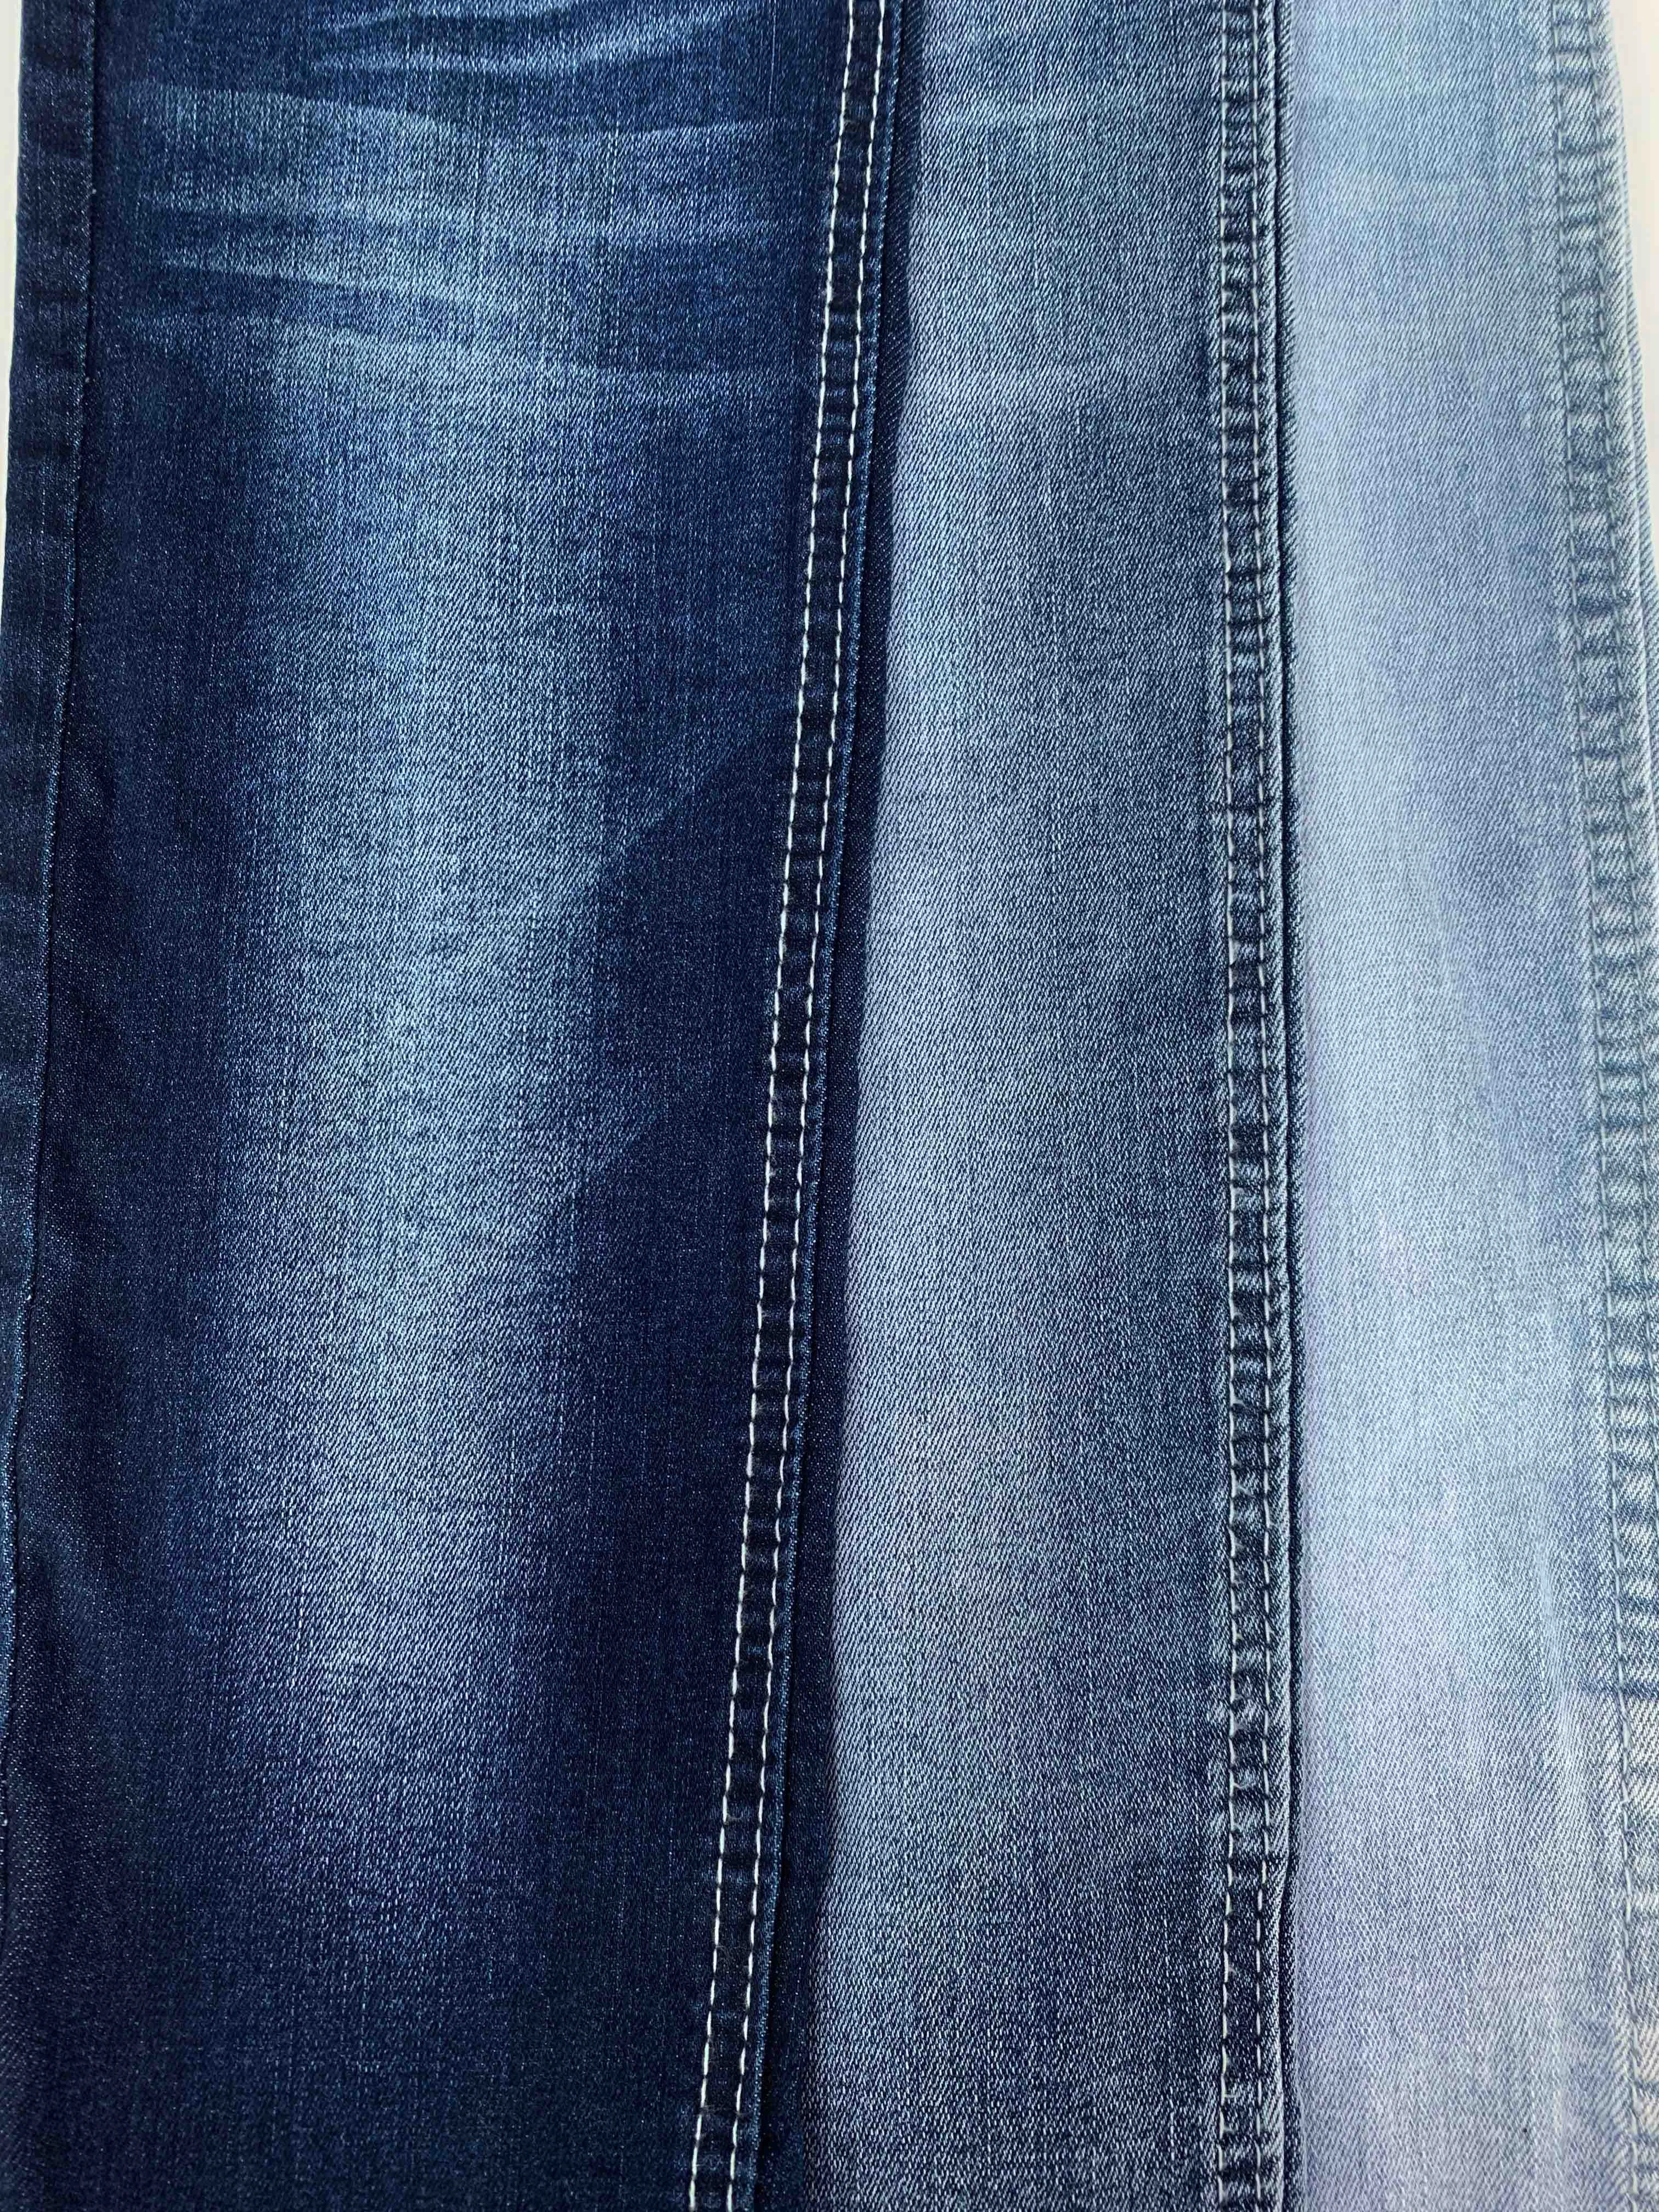 Top Quality 9.1oz Blue Denim Fabric with Spandex Stretch